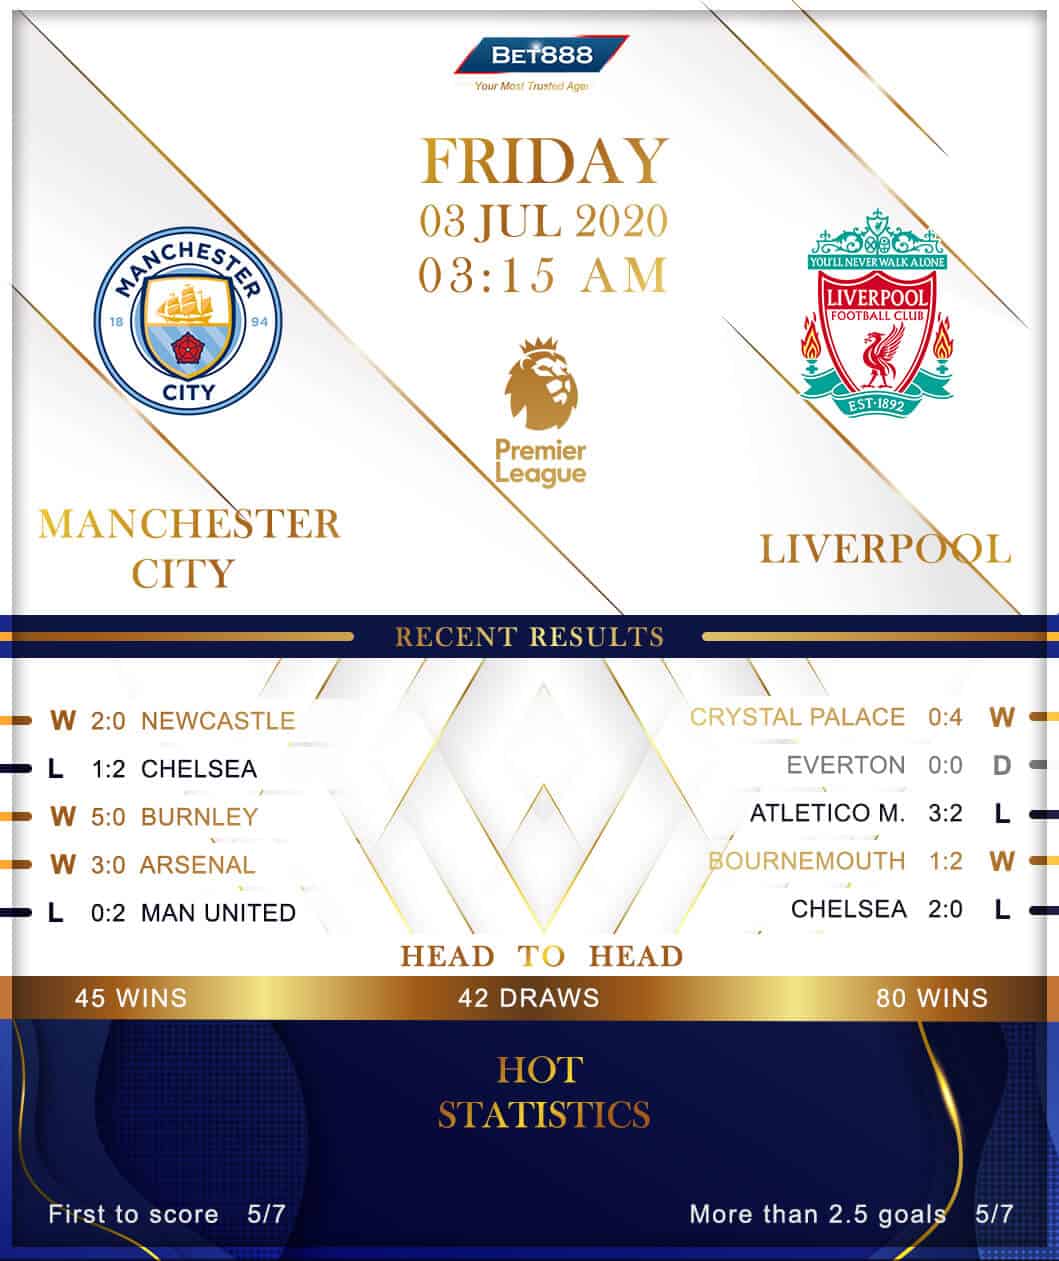 Manchester City vs Liverpool 03/07/20